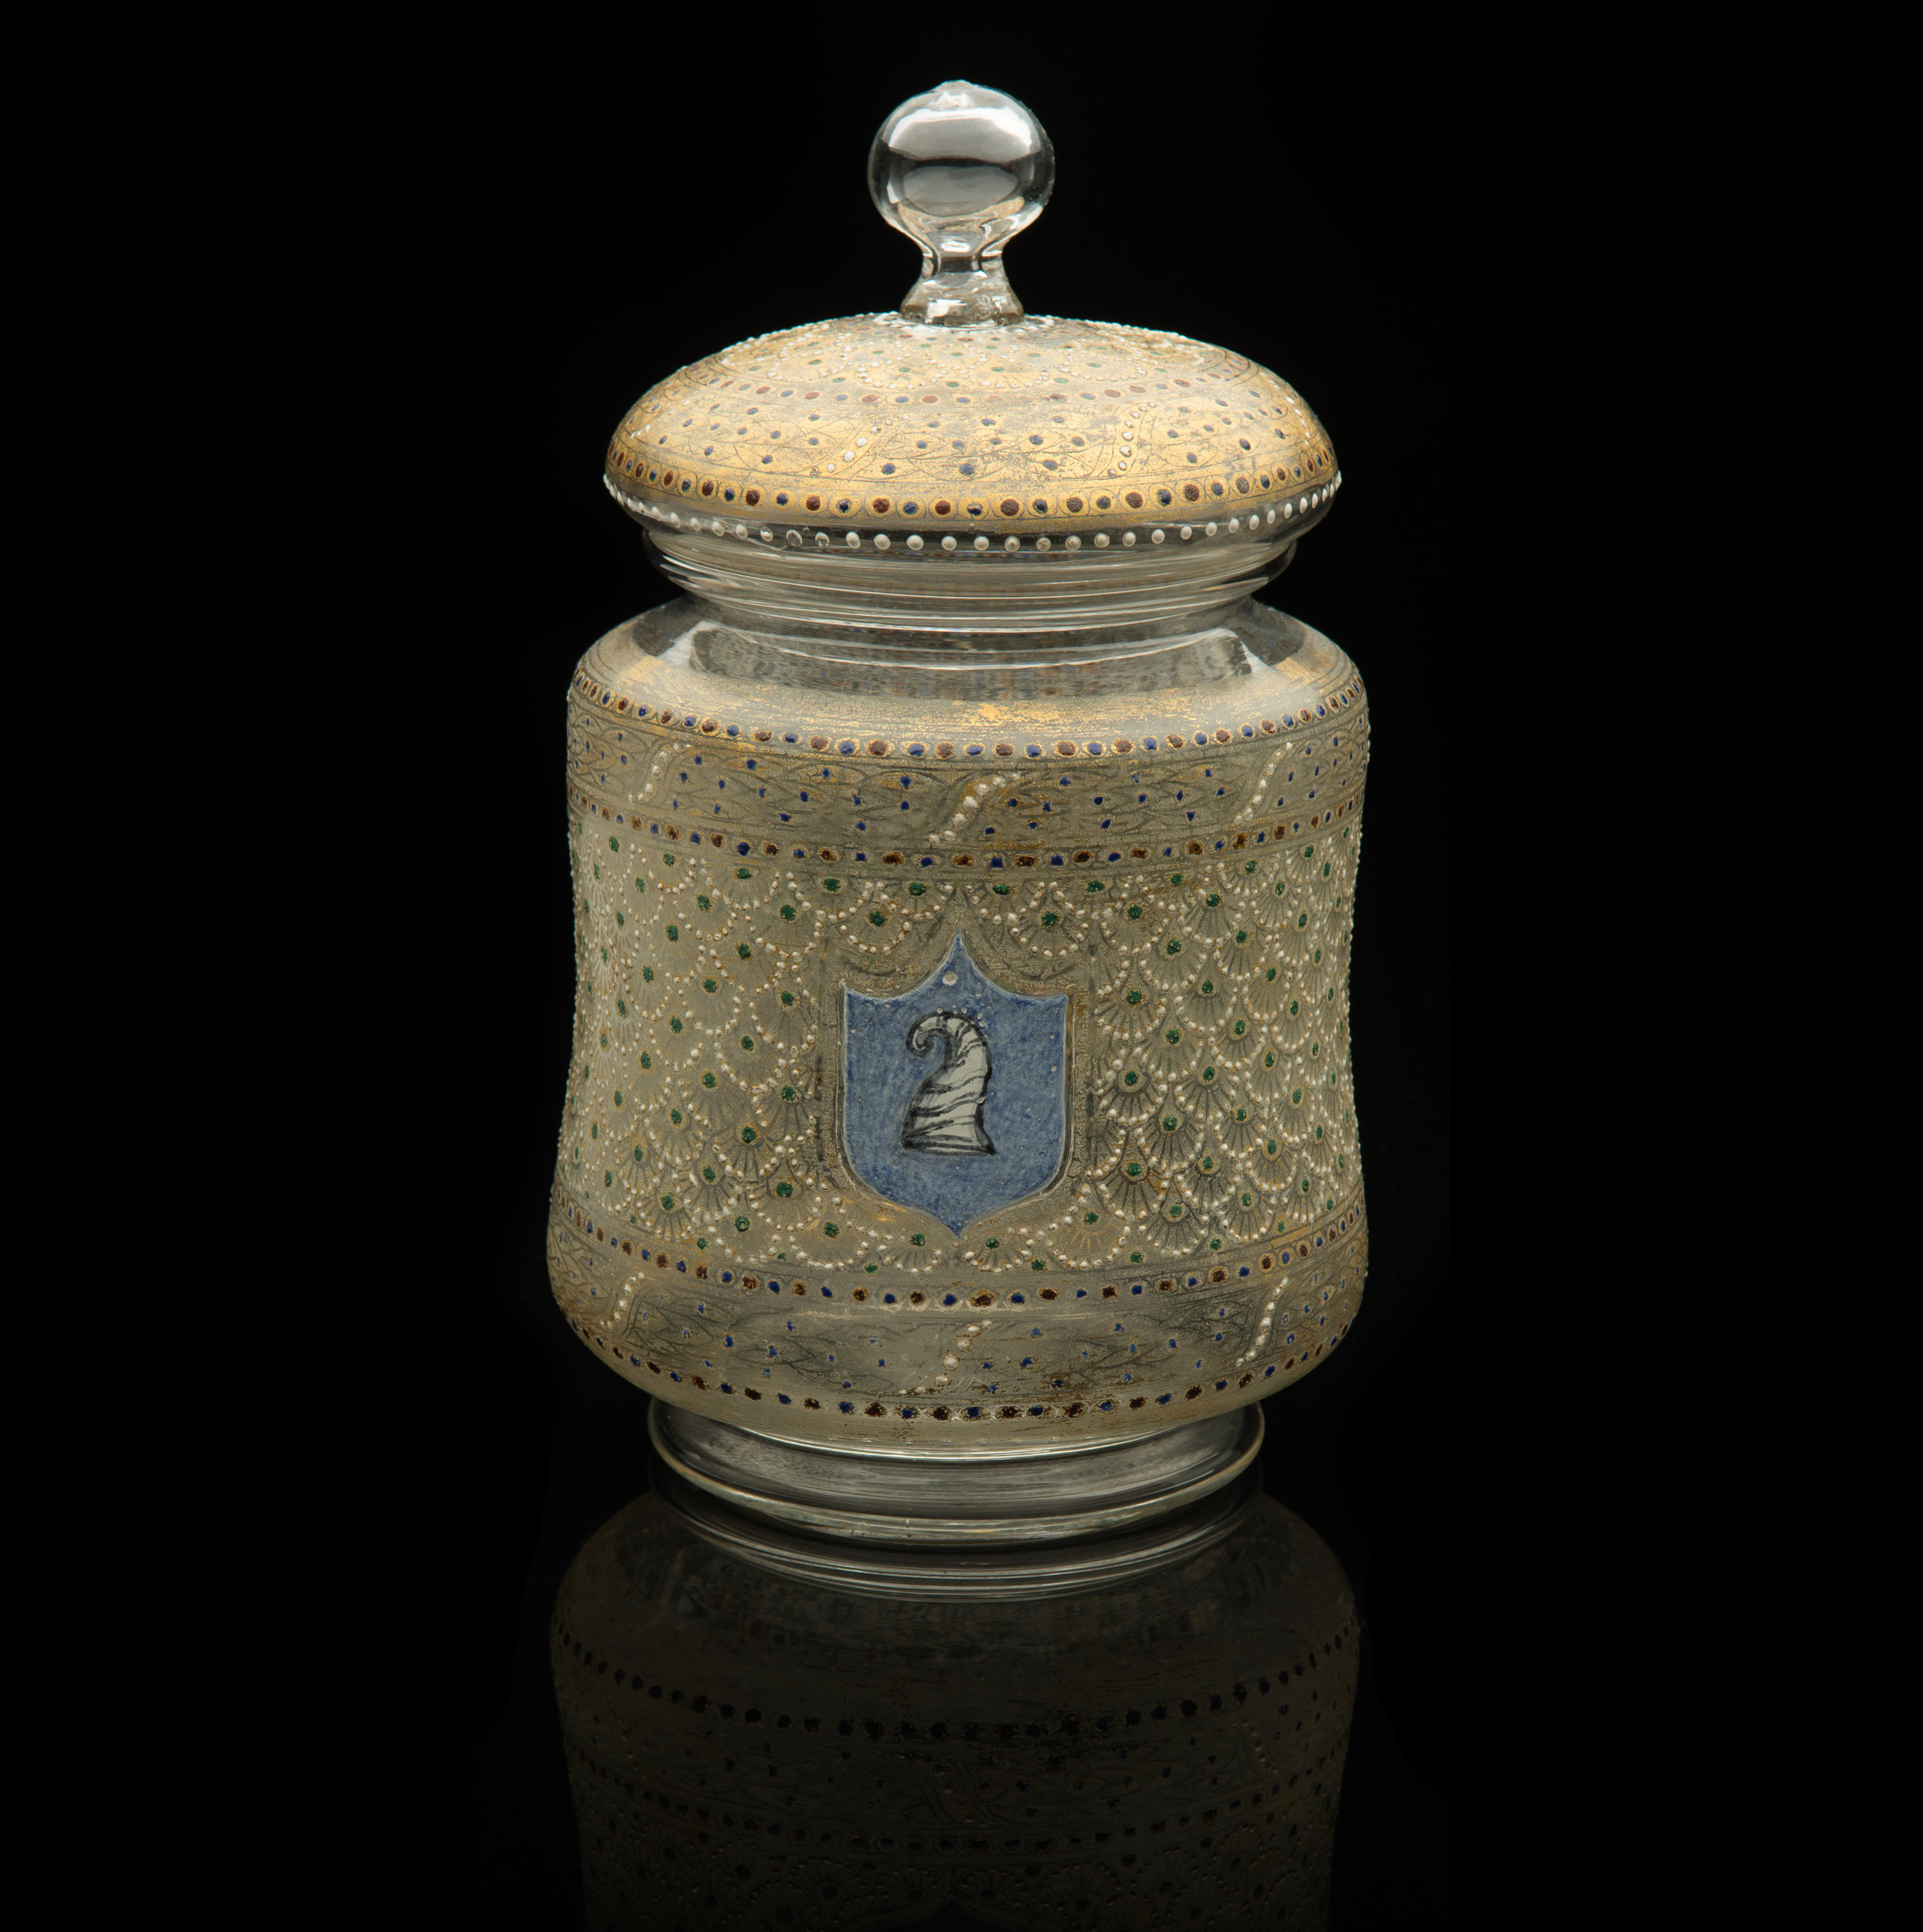  Salviati and Company,&nbsp; Lidded Jar with Doge Cap Emblem &nbsp;(circa 1885, glass and gilding, 8 3/4 x 5 x 5&nbsp;inches), VV.481 